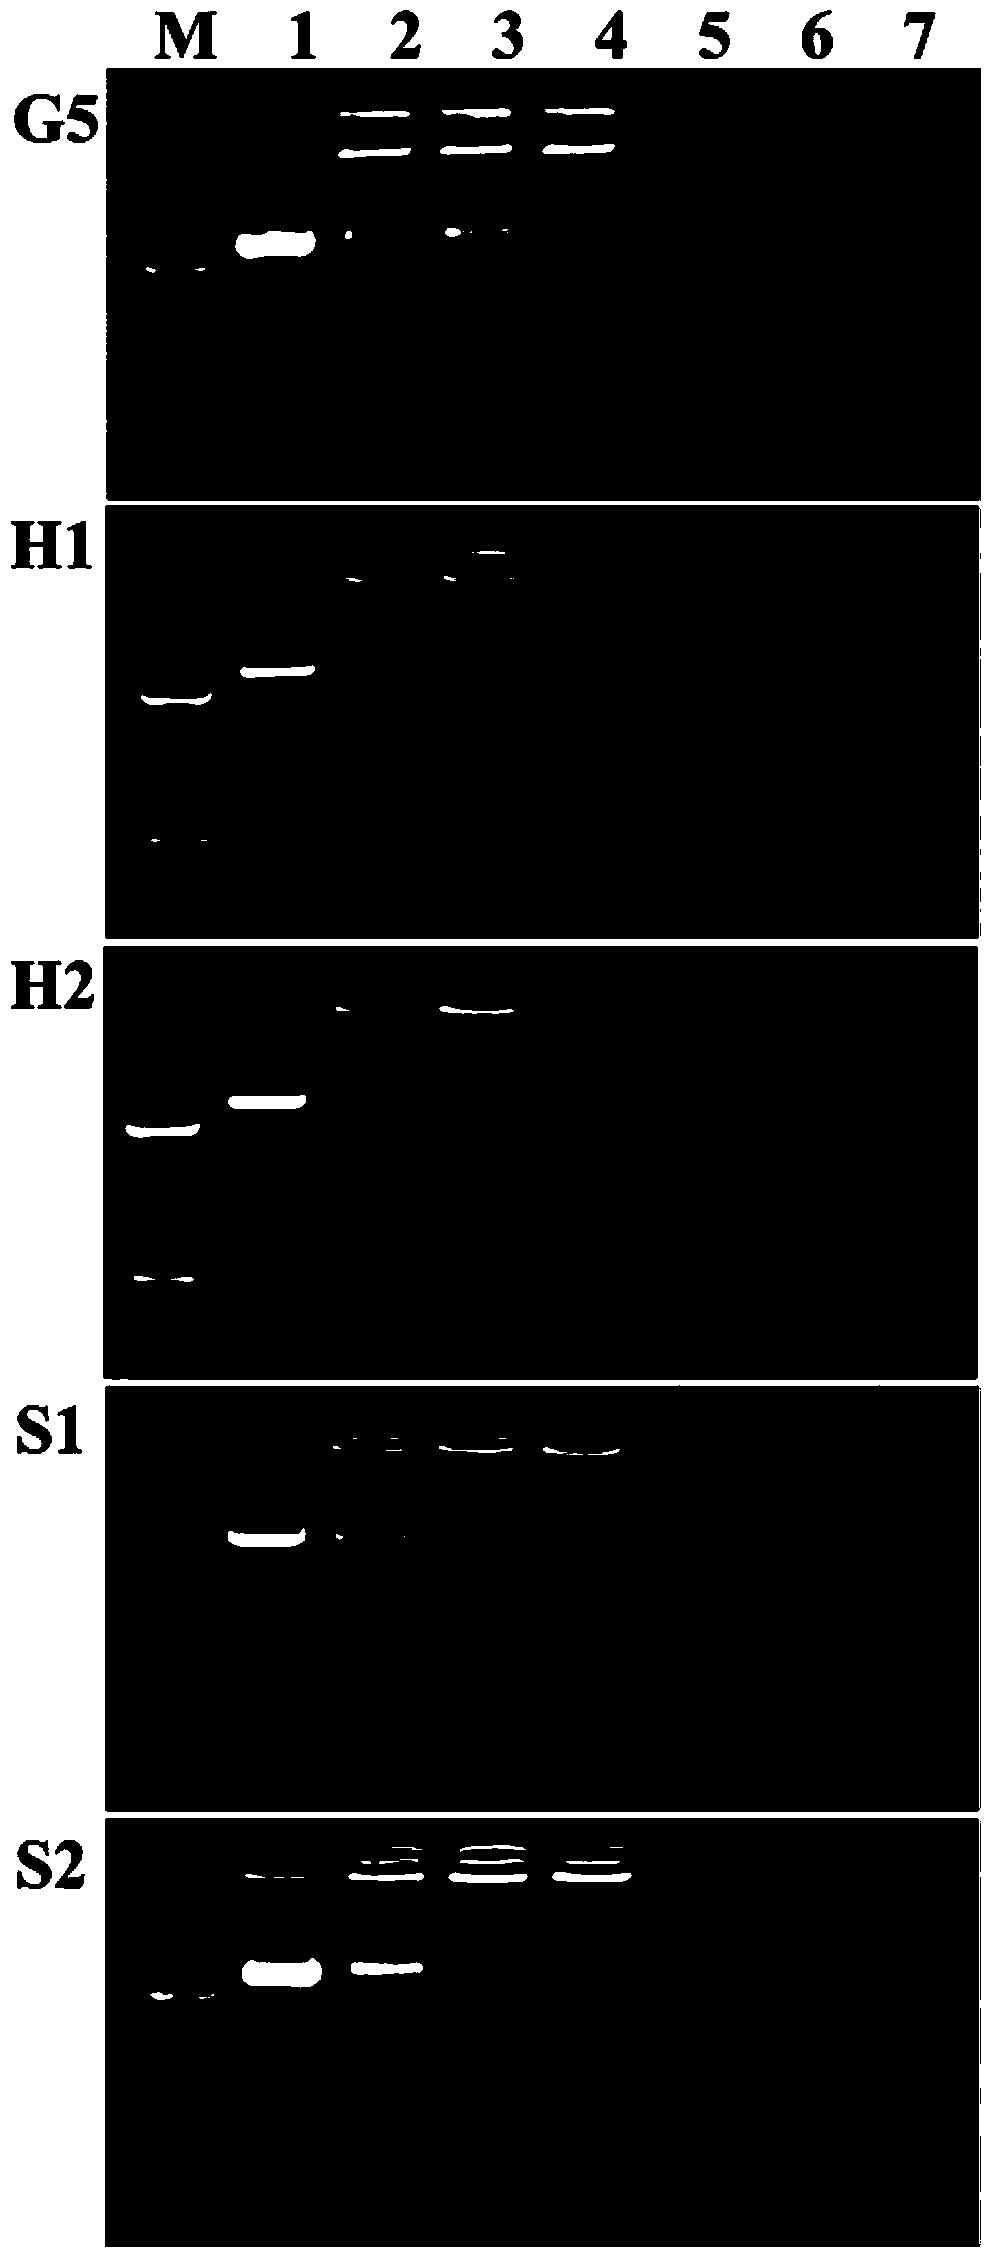 Method for gene transfection by utilizing PEG (polyethylene glycol) functionalized PAMAM (poly(amidoamine)) dendrimer carrier encapsulating gold nanoparticles